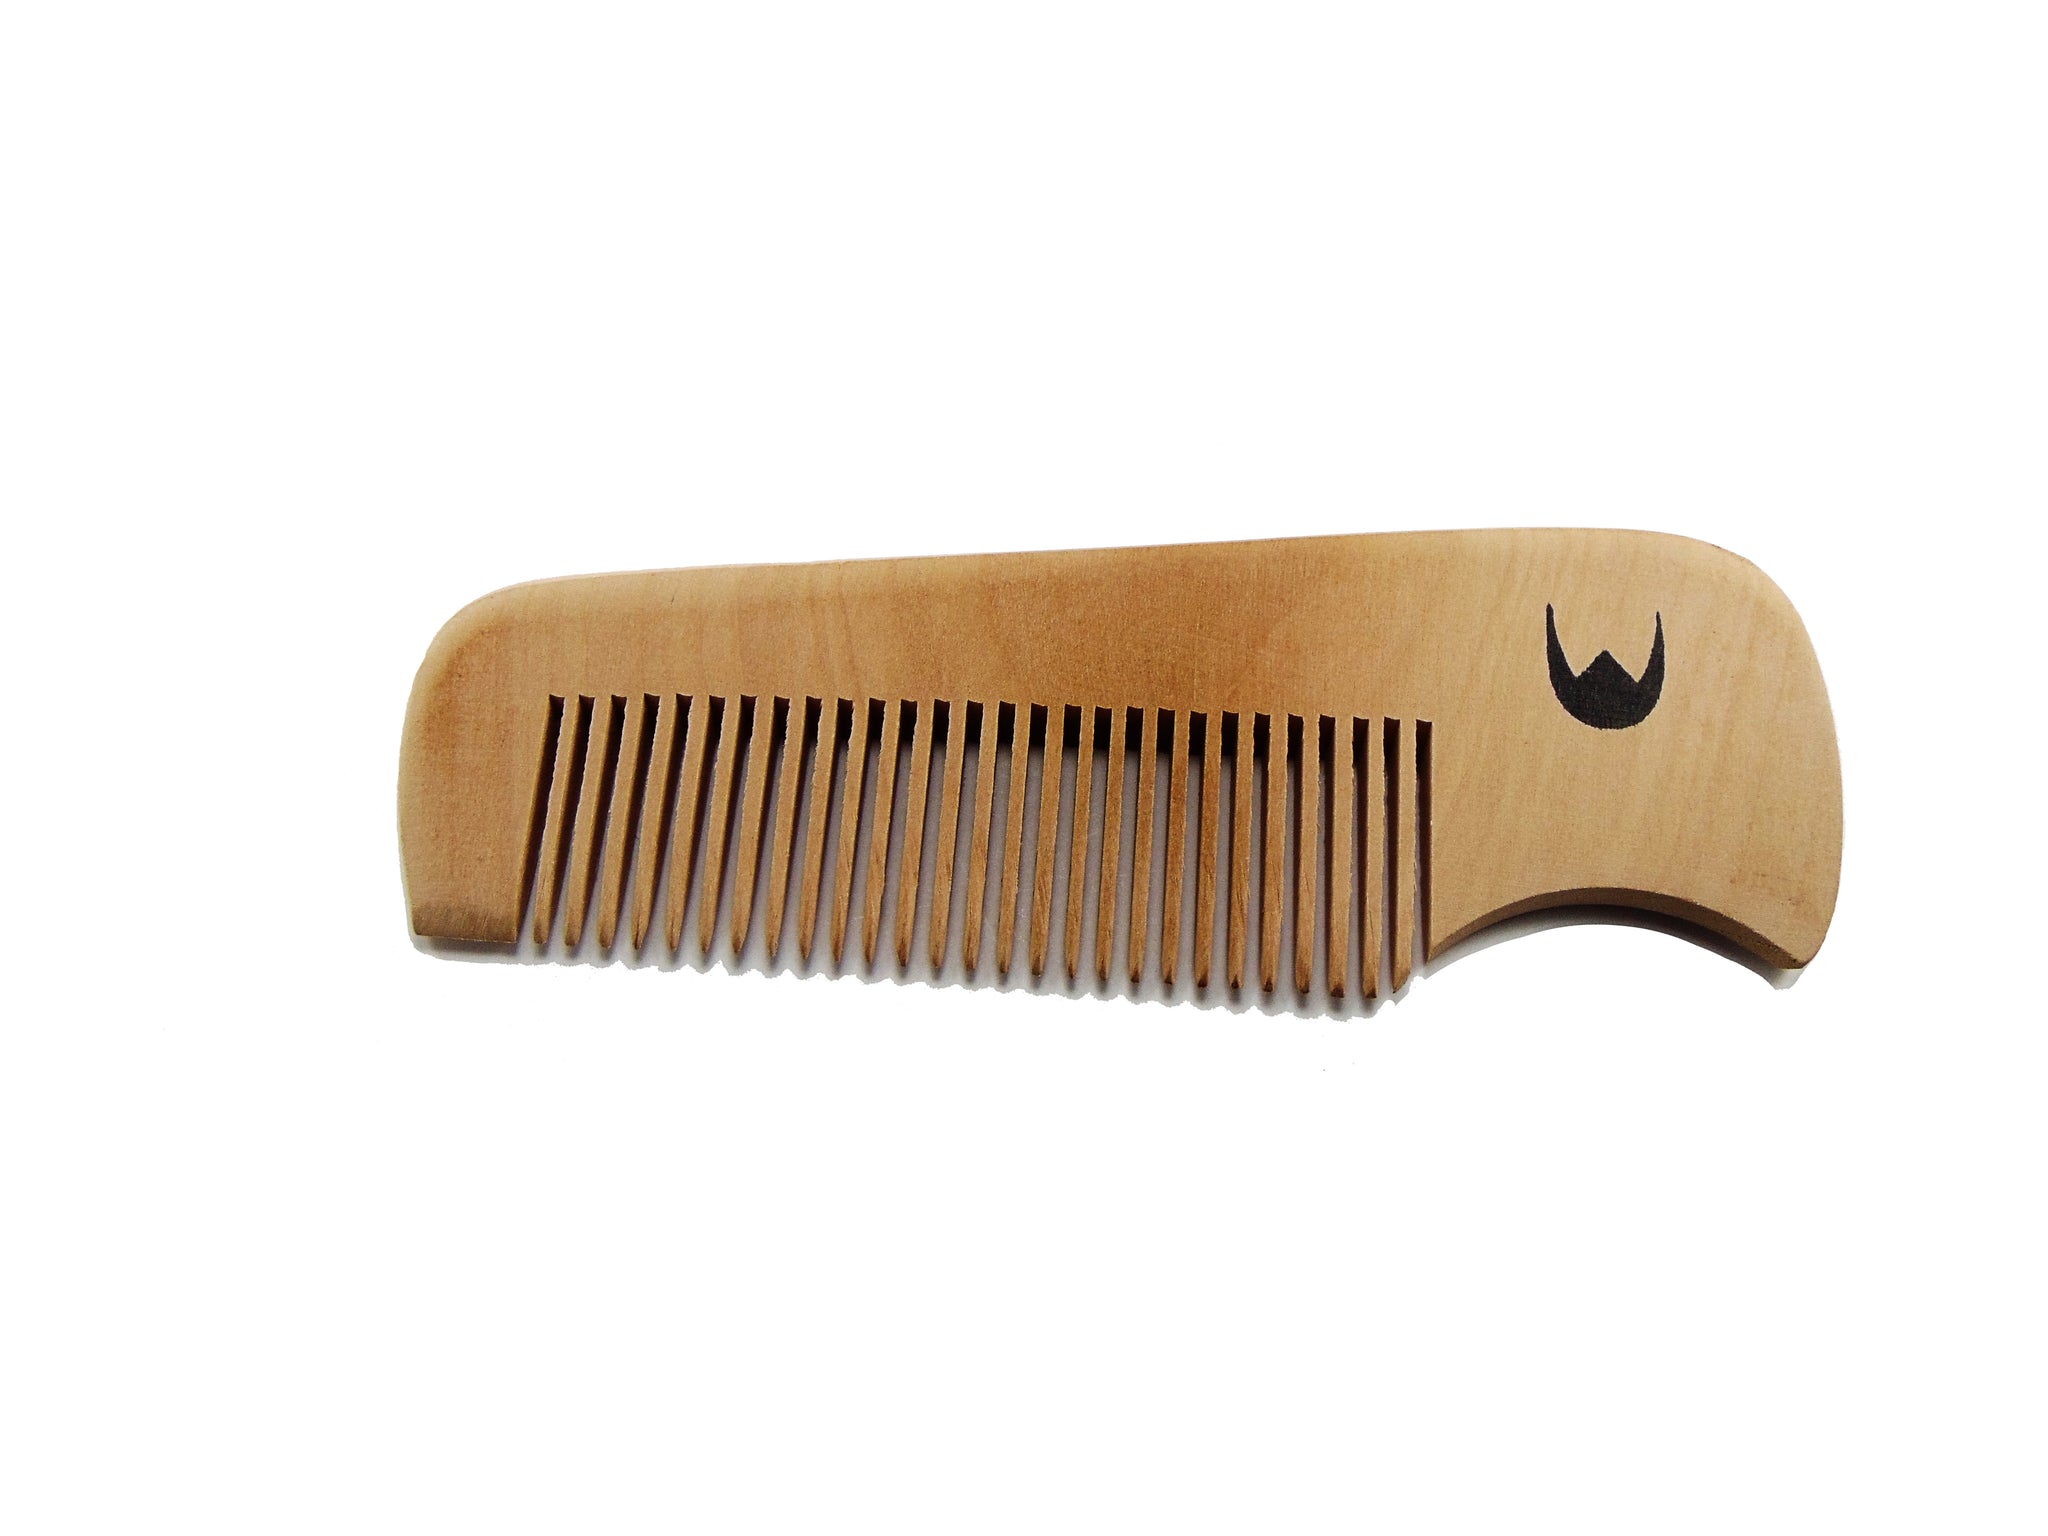 Pocket size wooden comb